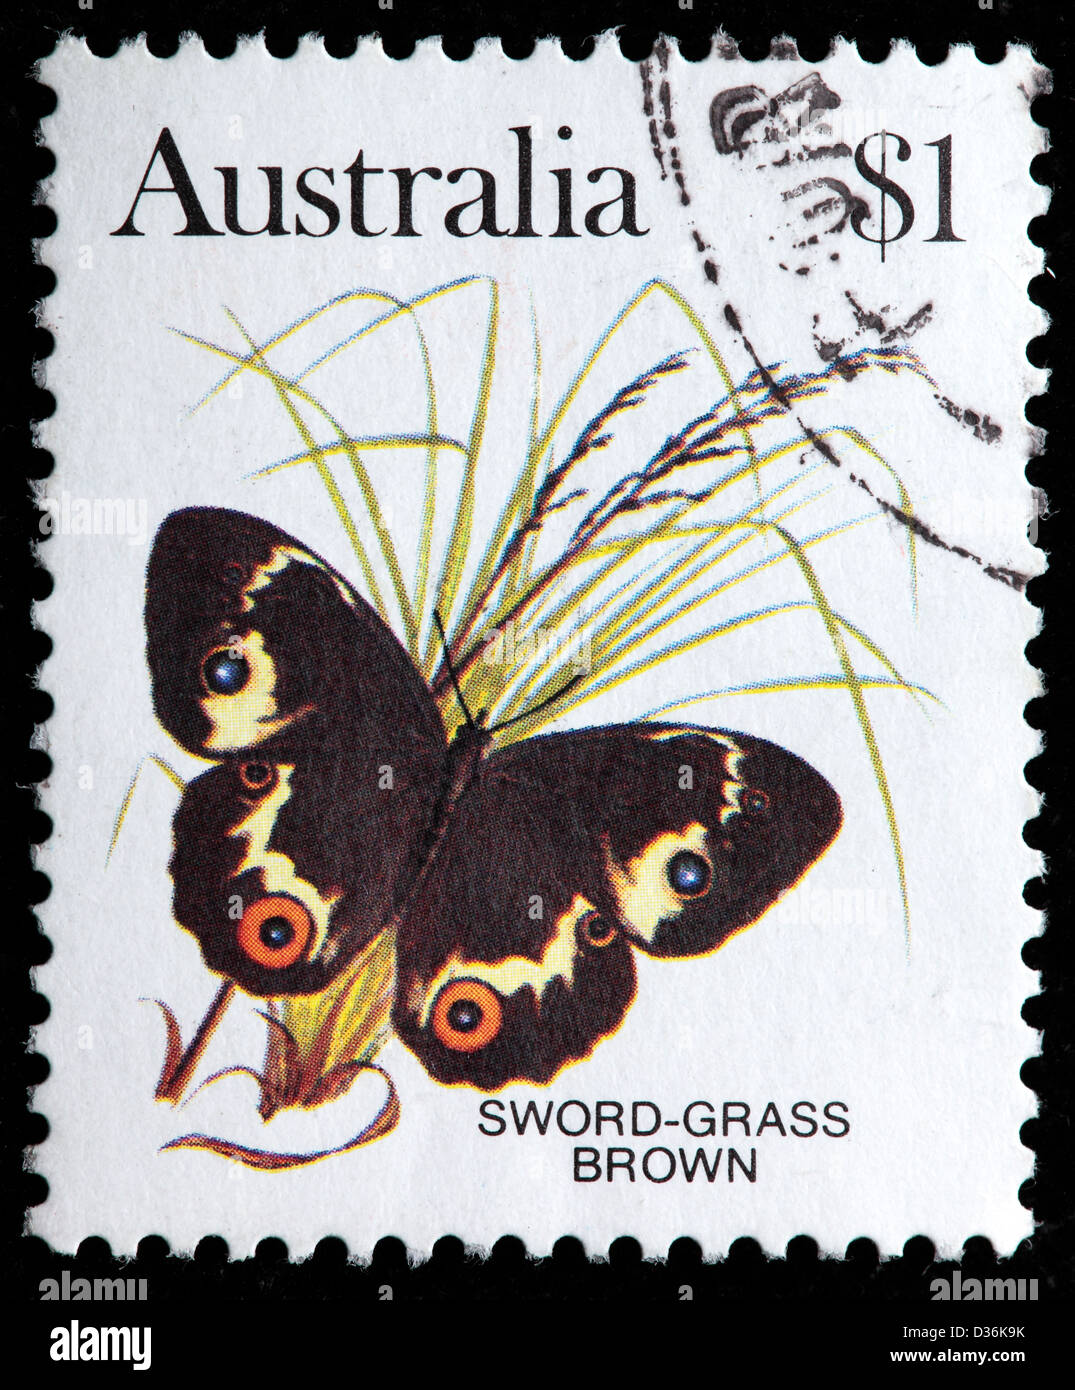 Sword-grass brown, postage stamp, Australia, 1983 Stock Photo